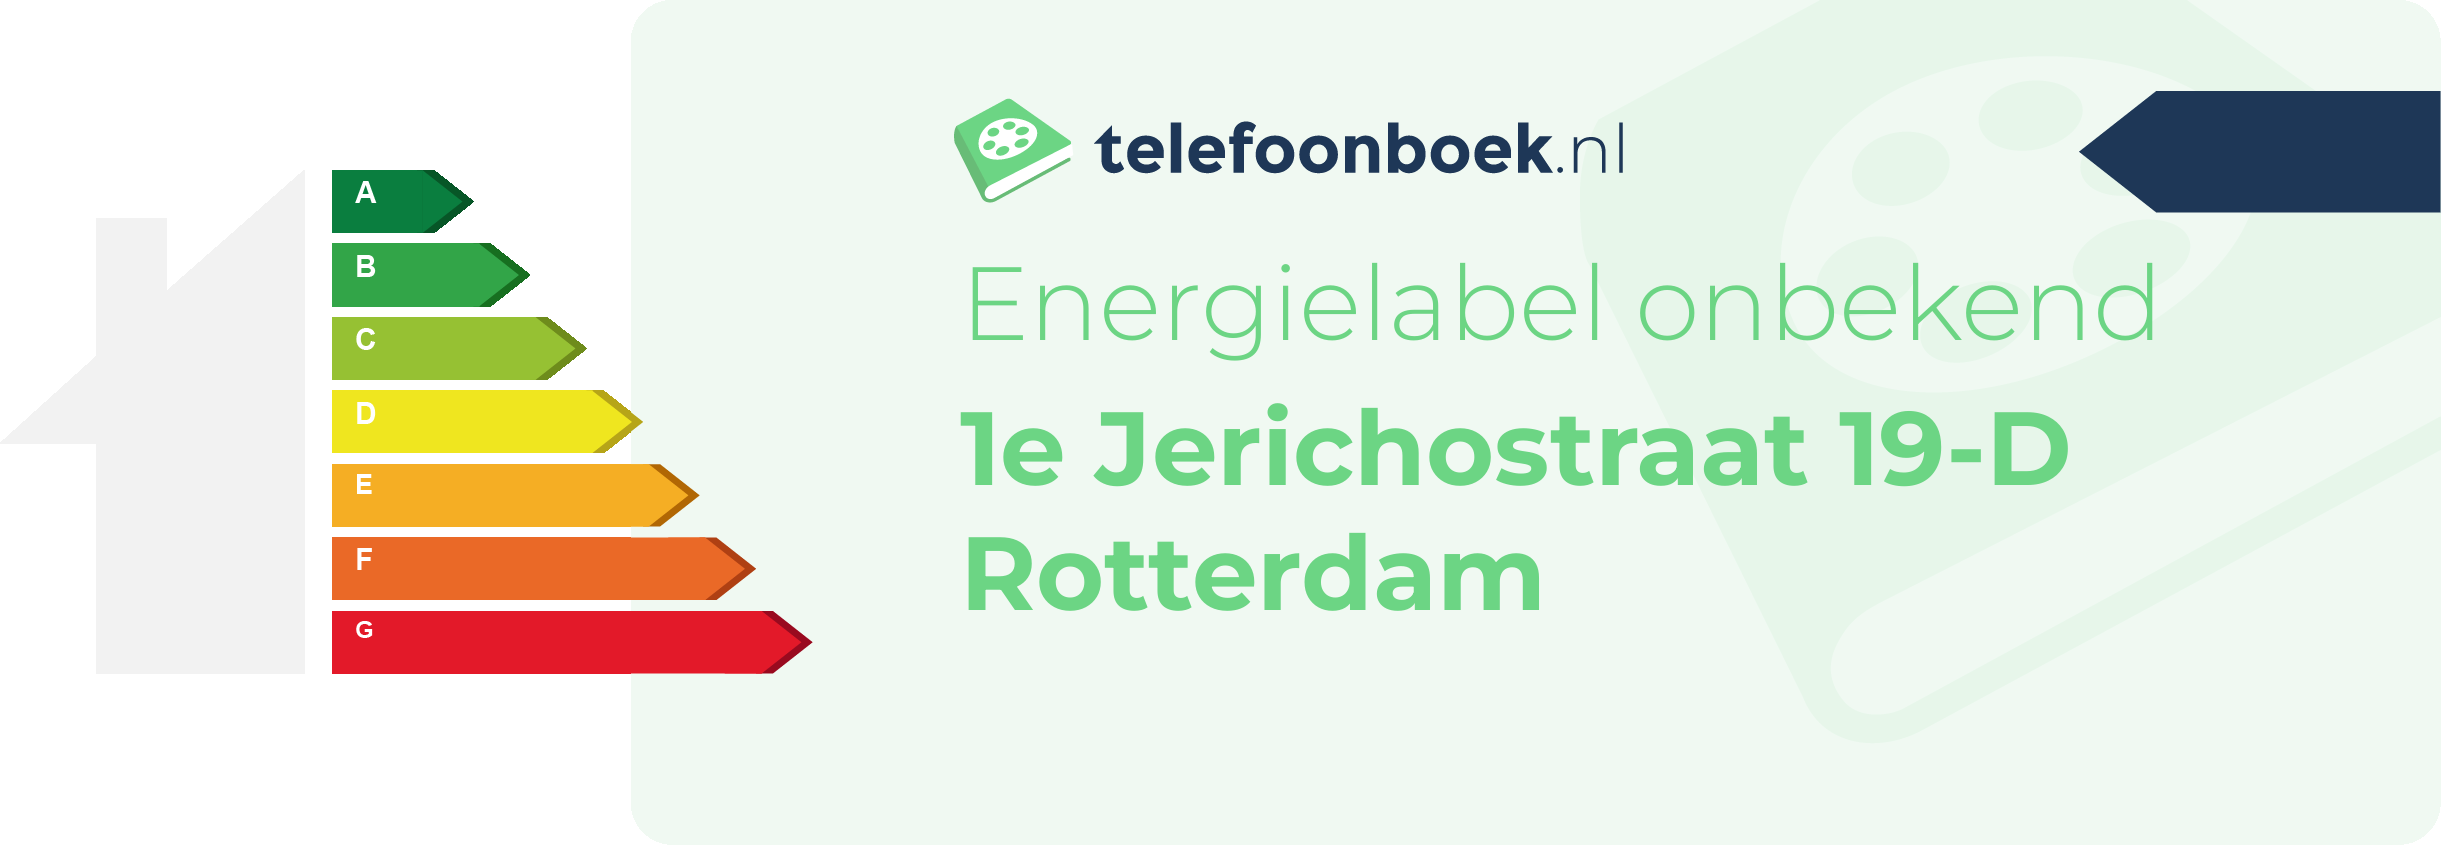 Energielabel 1e Jerichostraat 19-D Rotterdam